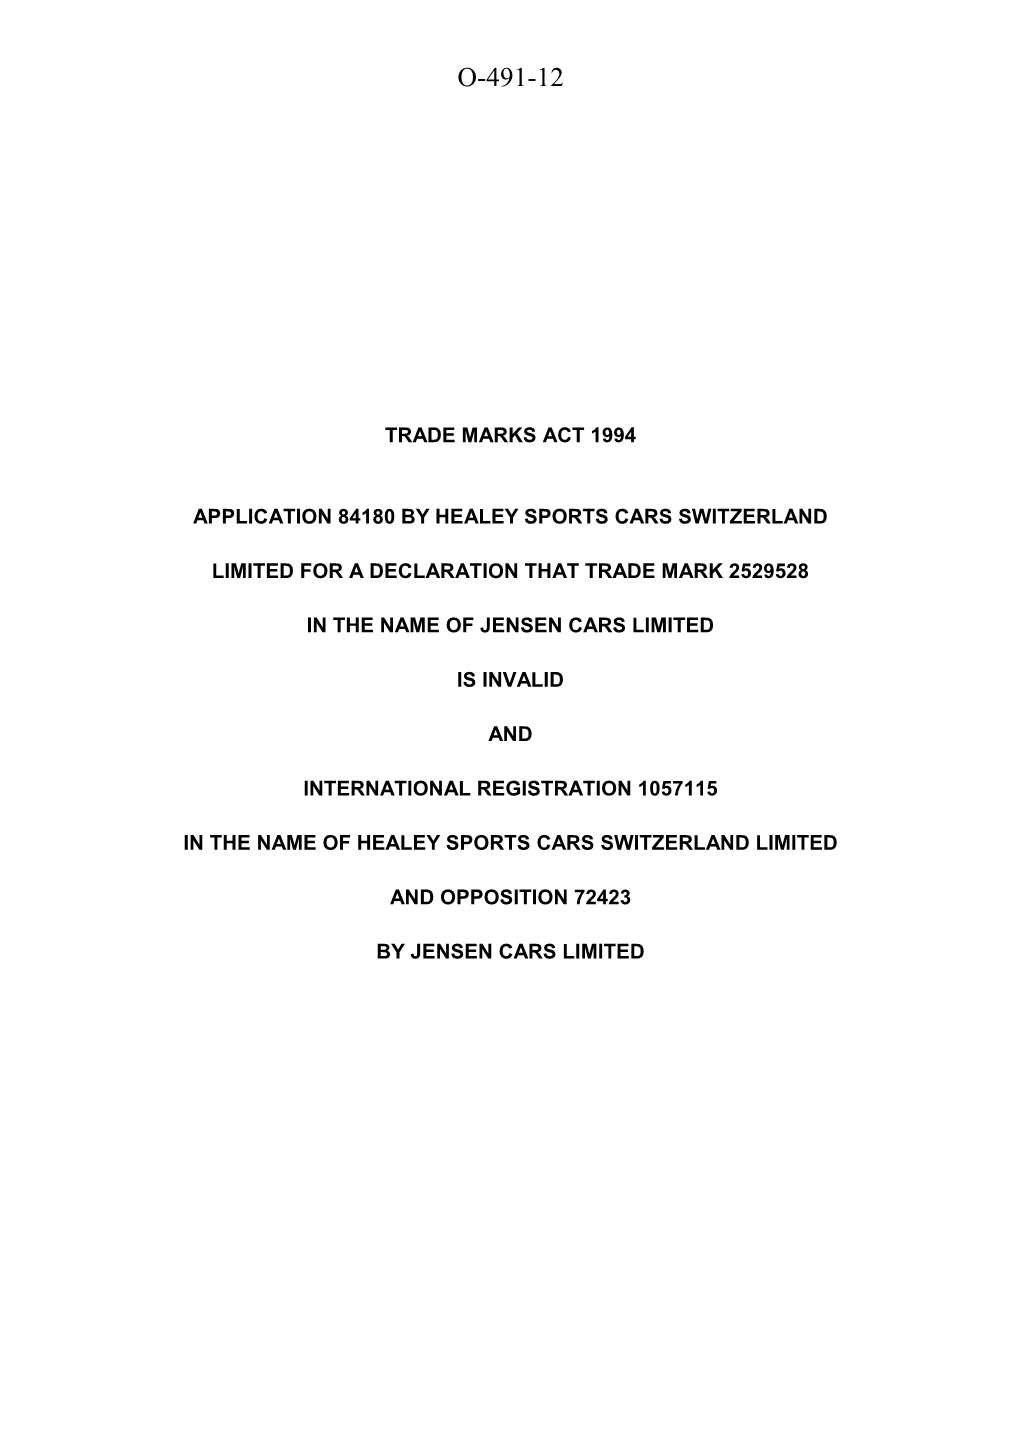 Trade Mark Inter Partes Decision (O/491/12)